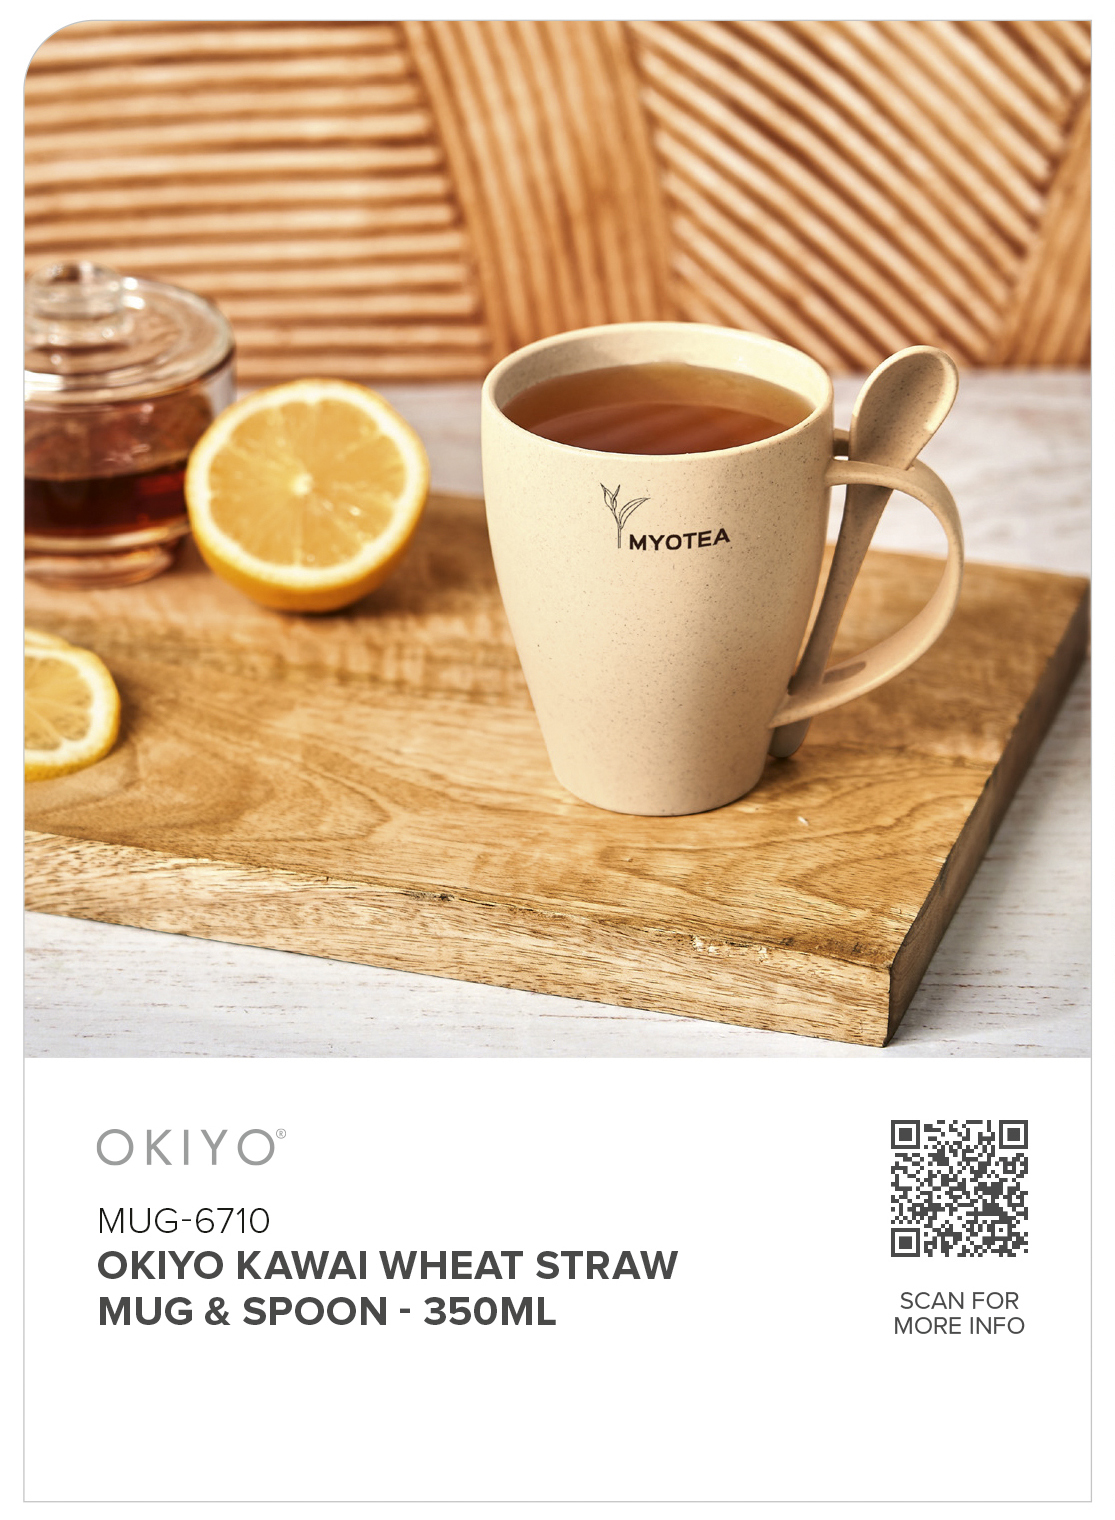 MUG-6710 - Okiyo Kawai Wheat Straw Mug & Spoon - 350ml - Catalogue Image